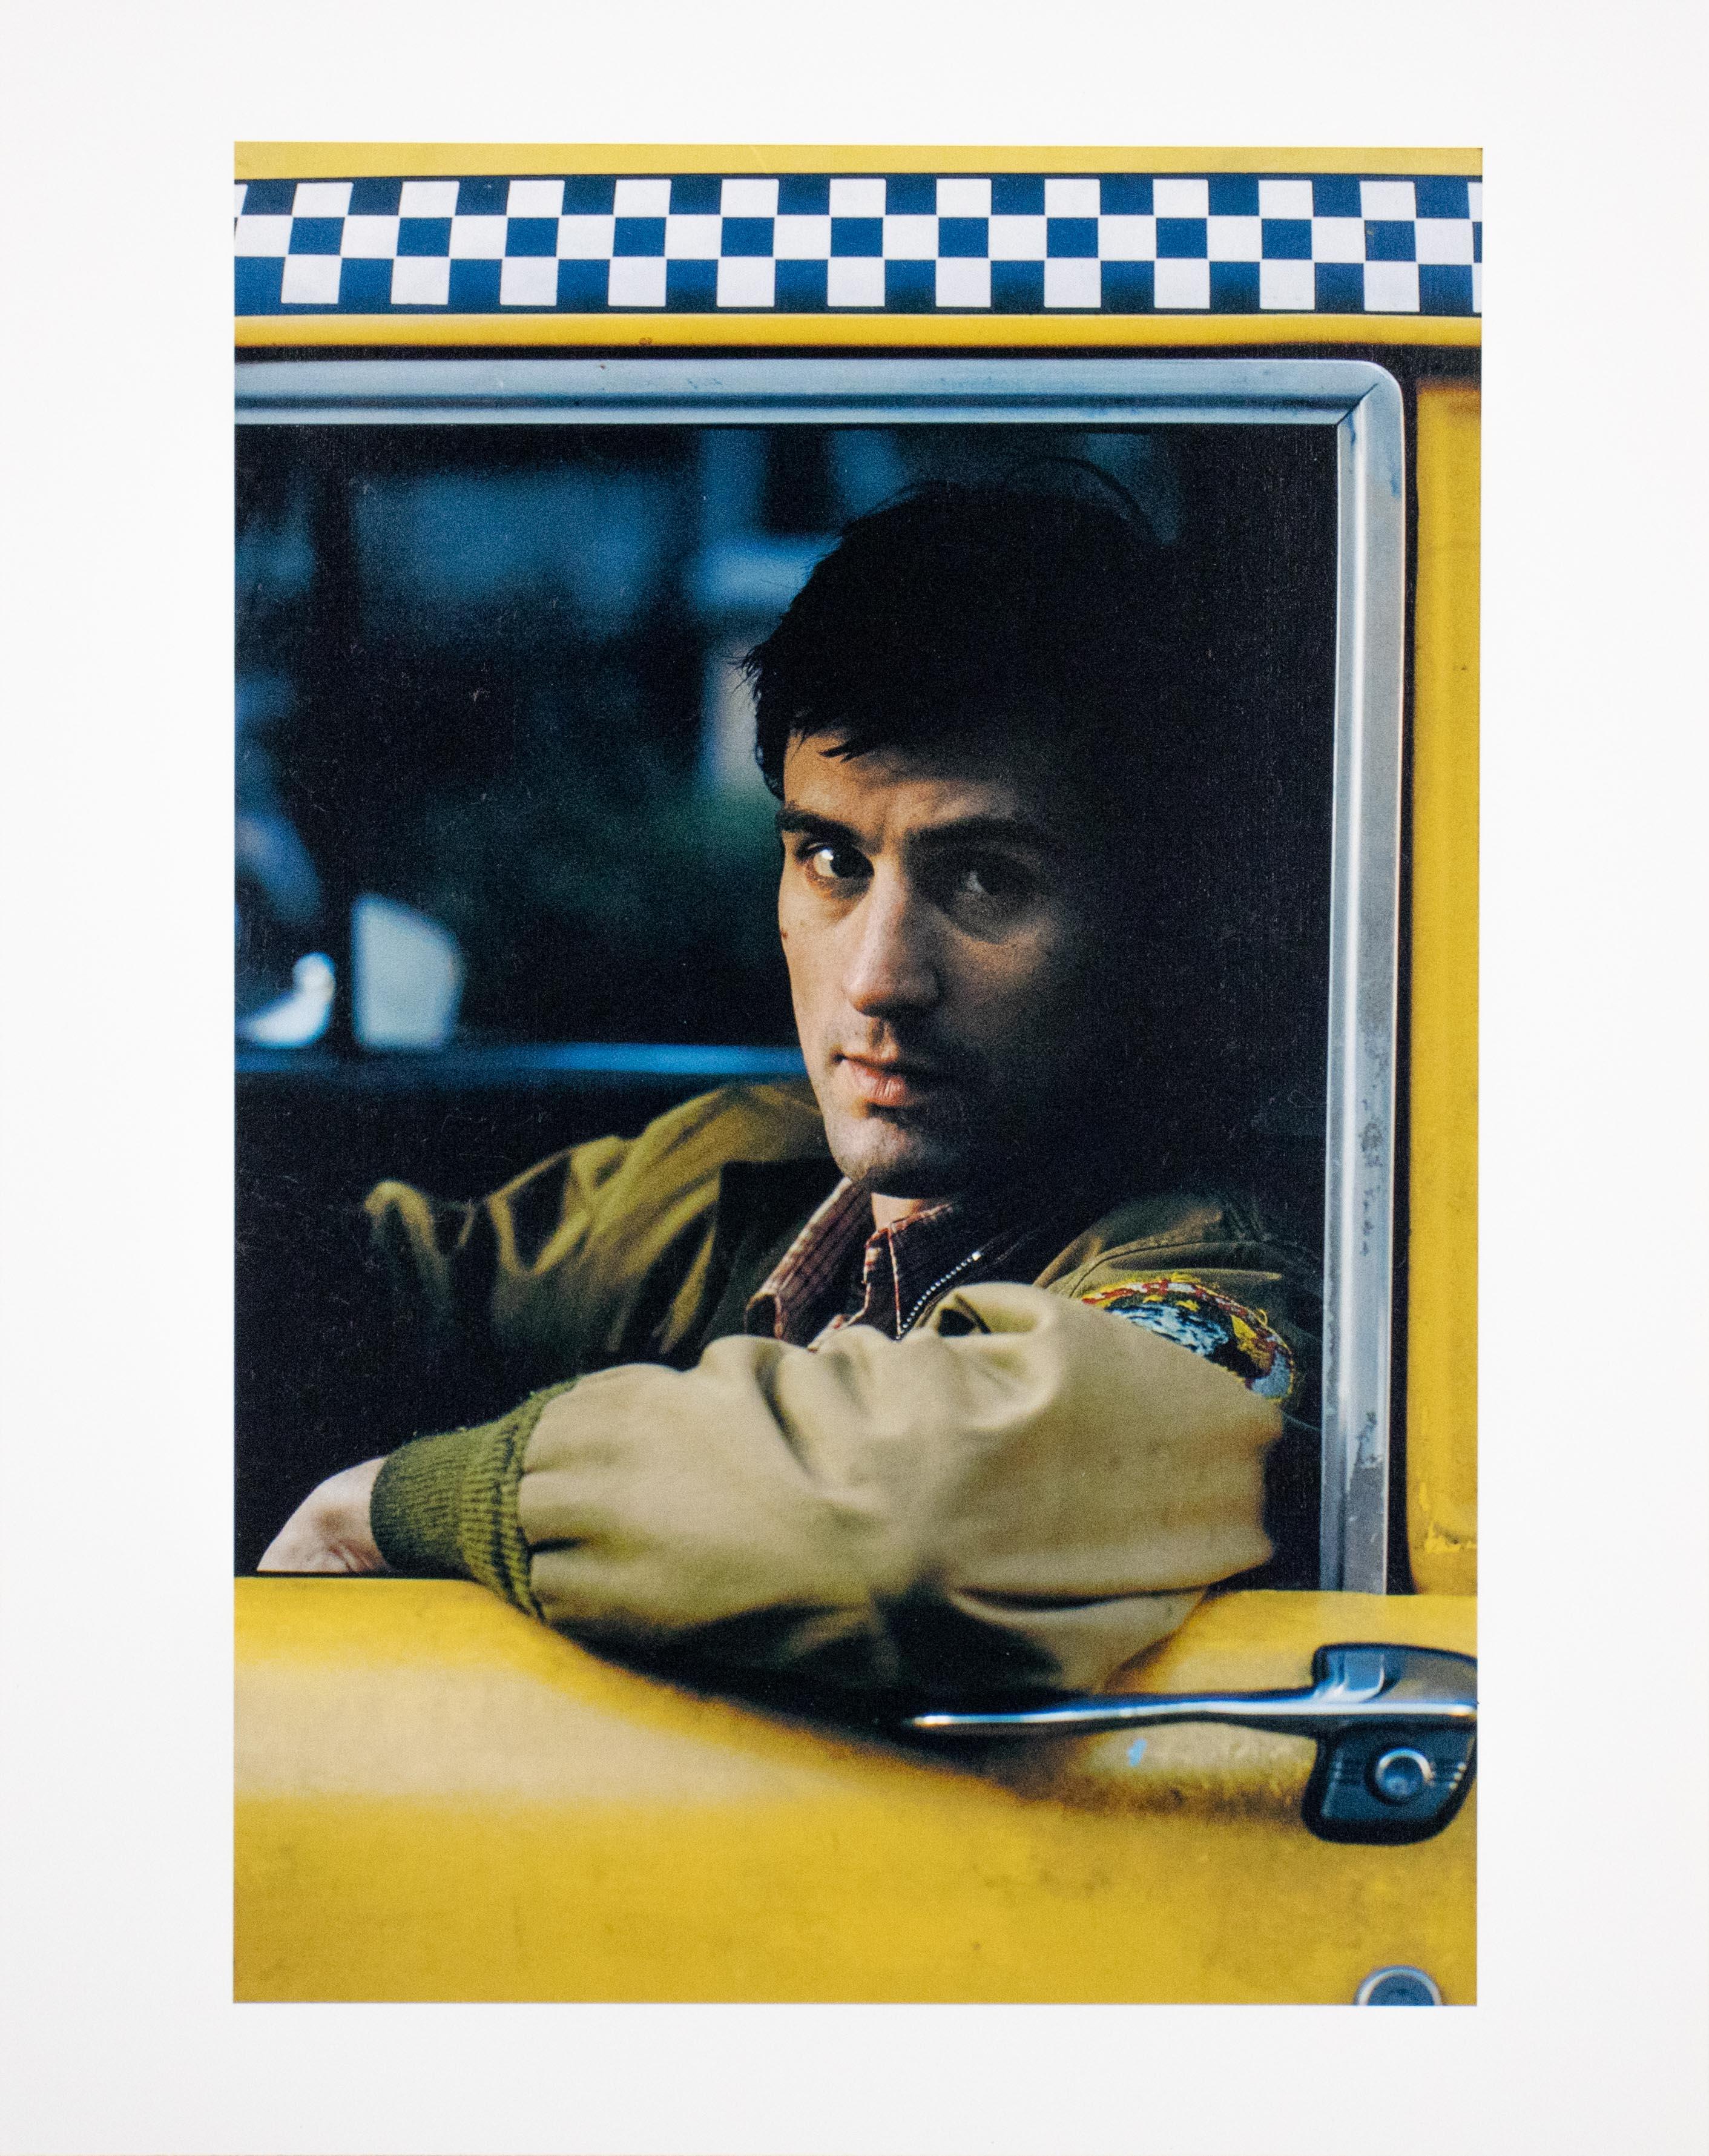 Steve Schapiro Portrait Photograph – Robert DeNiro als Taxifahrer – handsignierte Fotografie